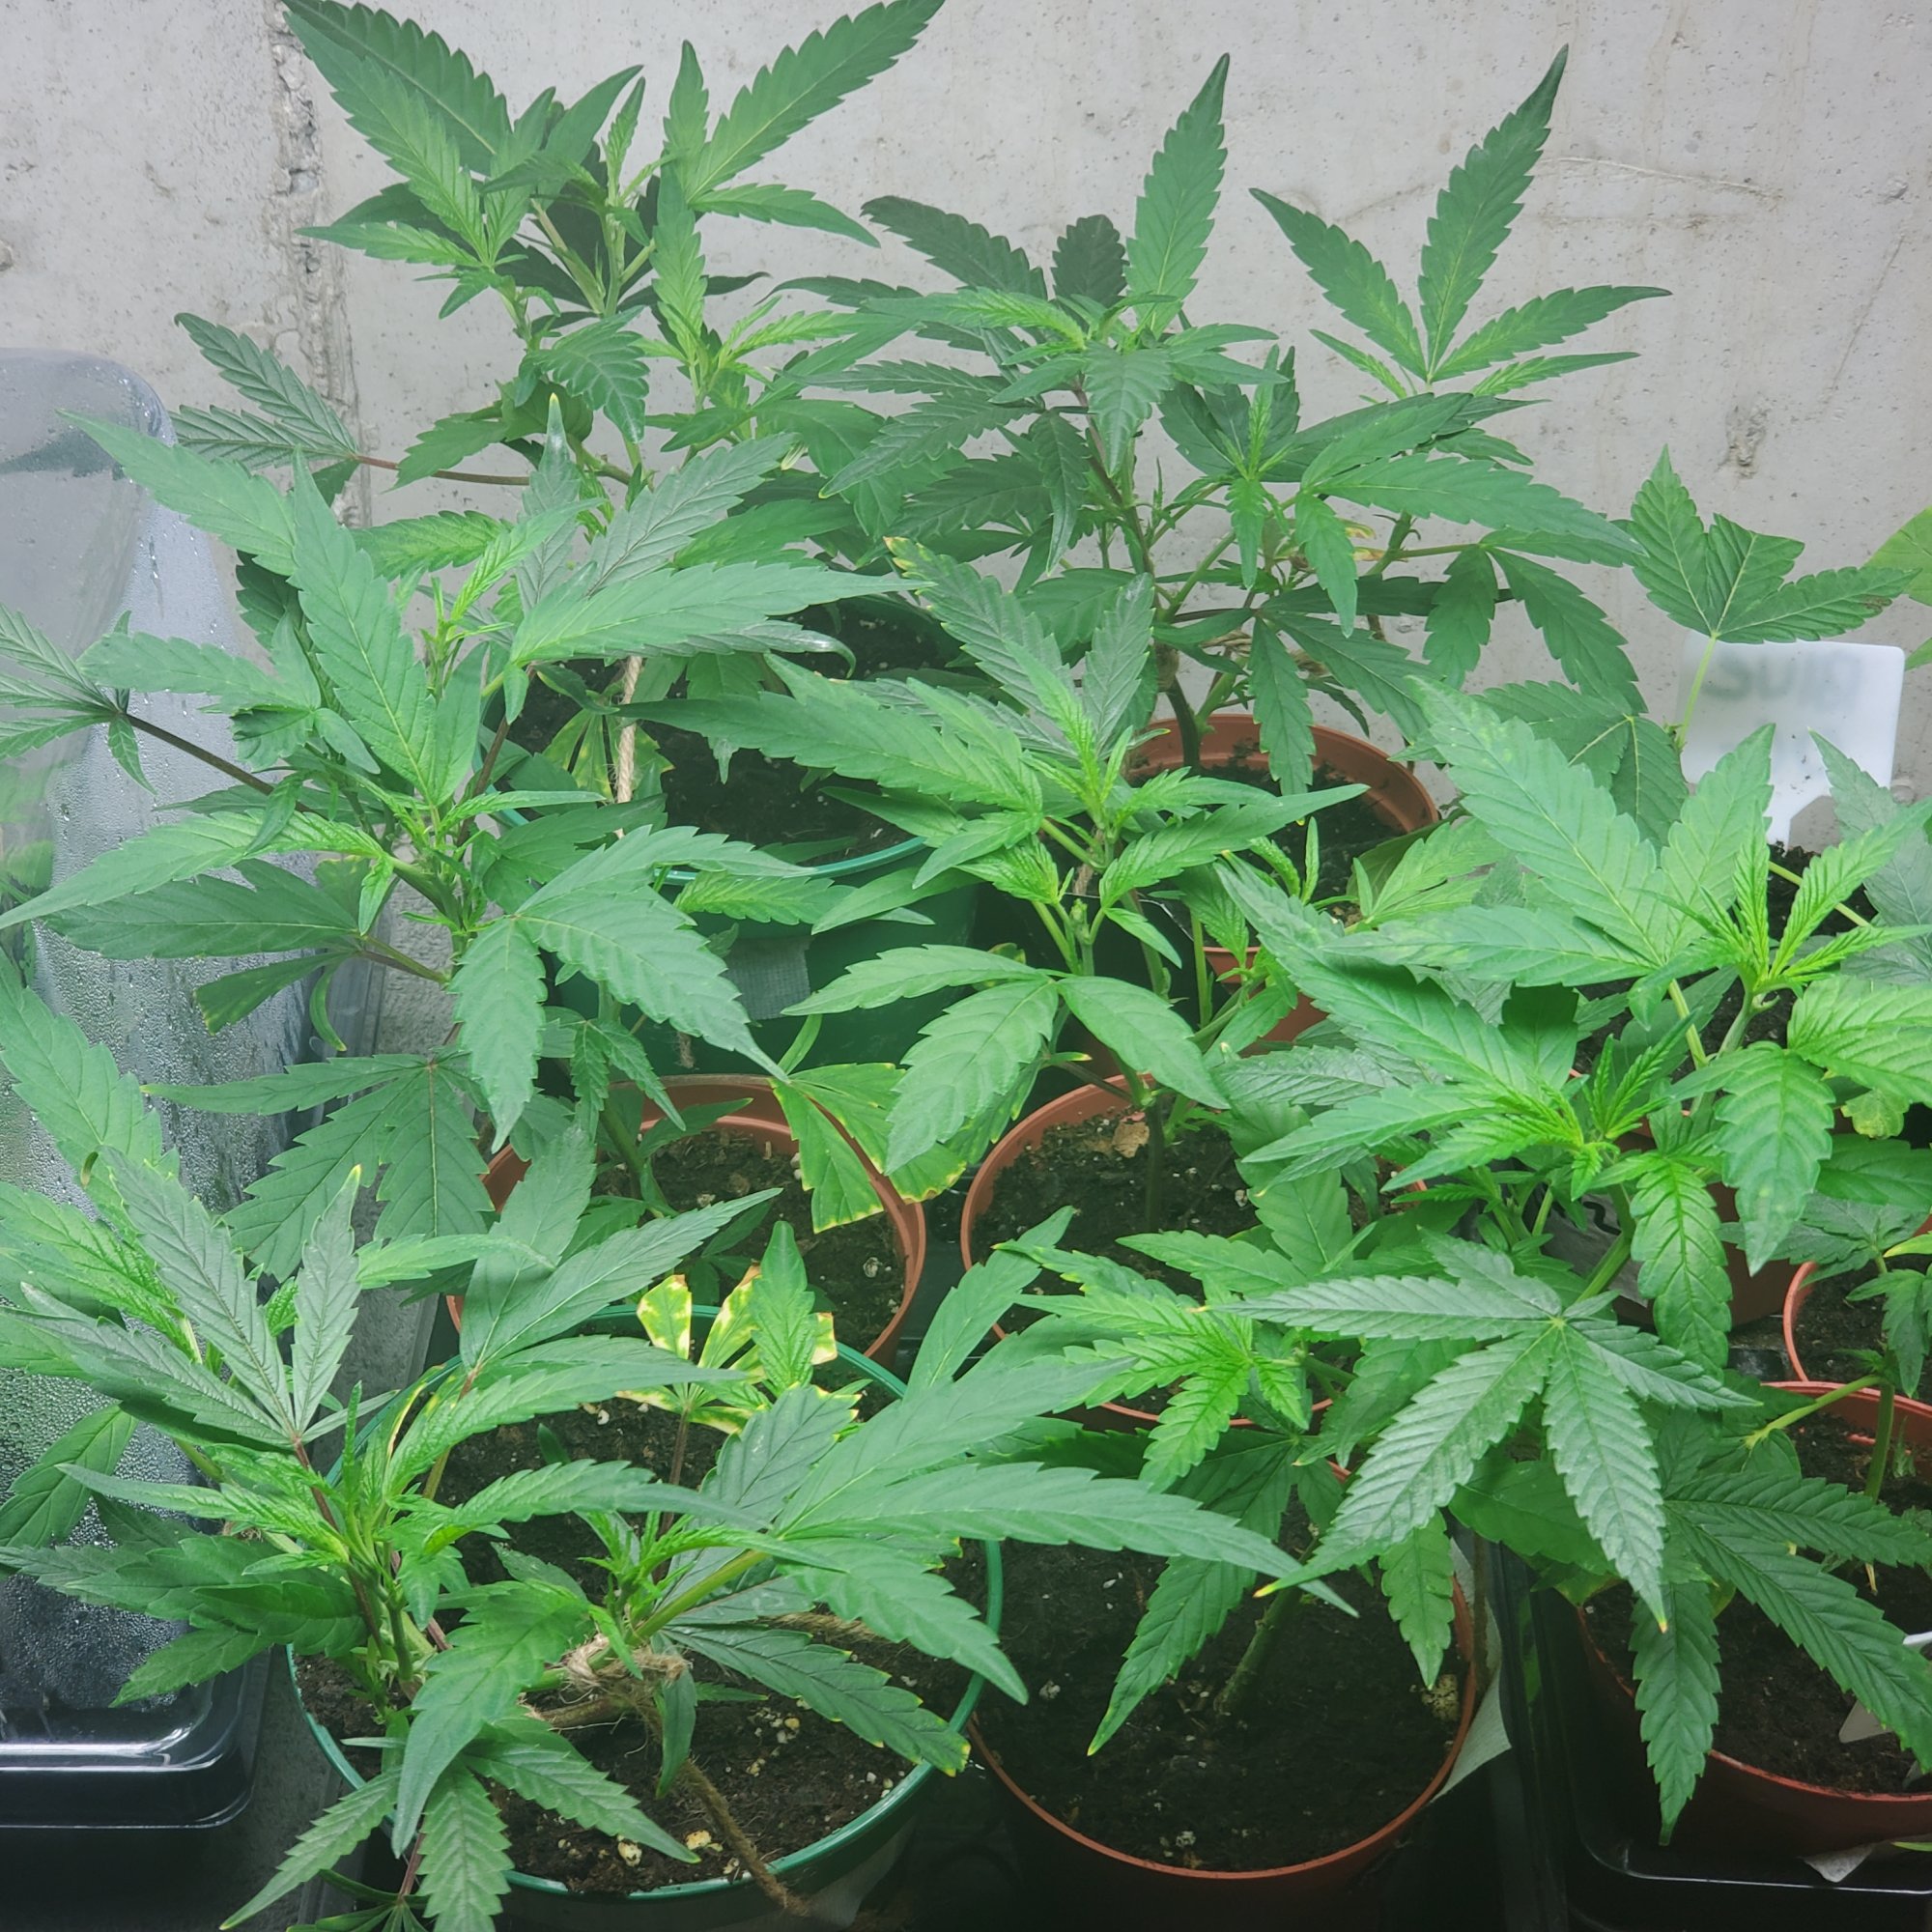 I need advice on growing mother plants 2